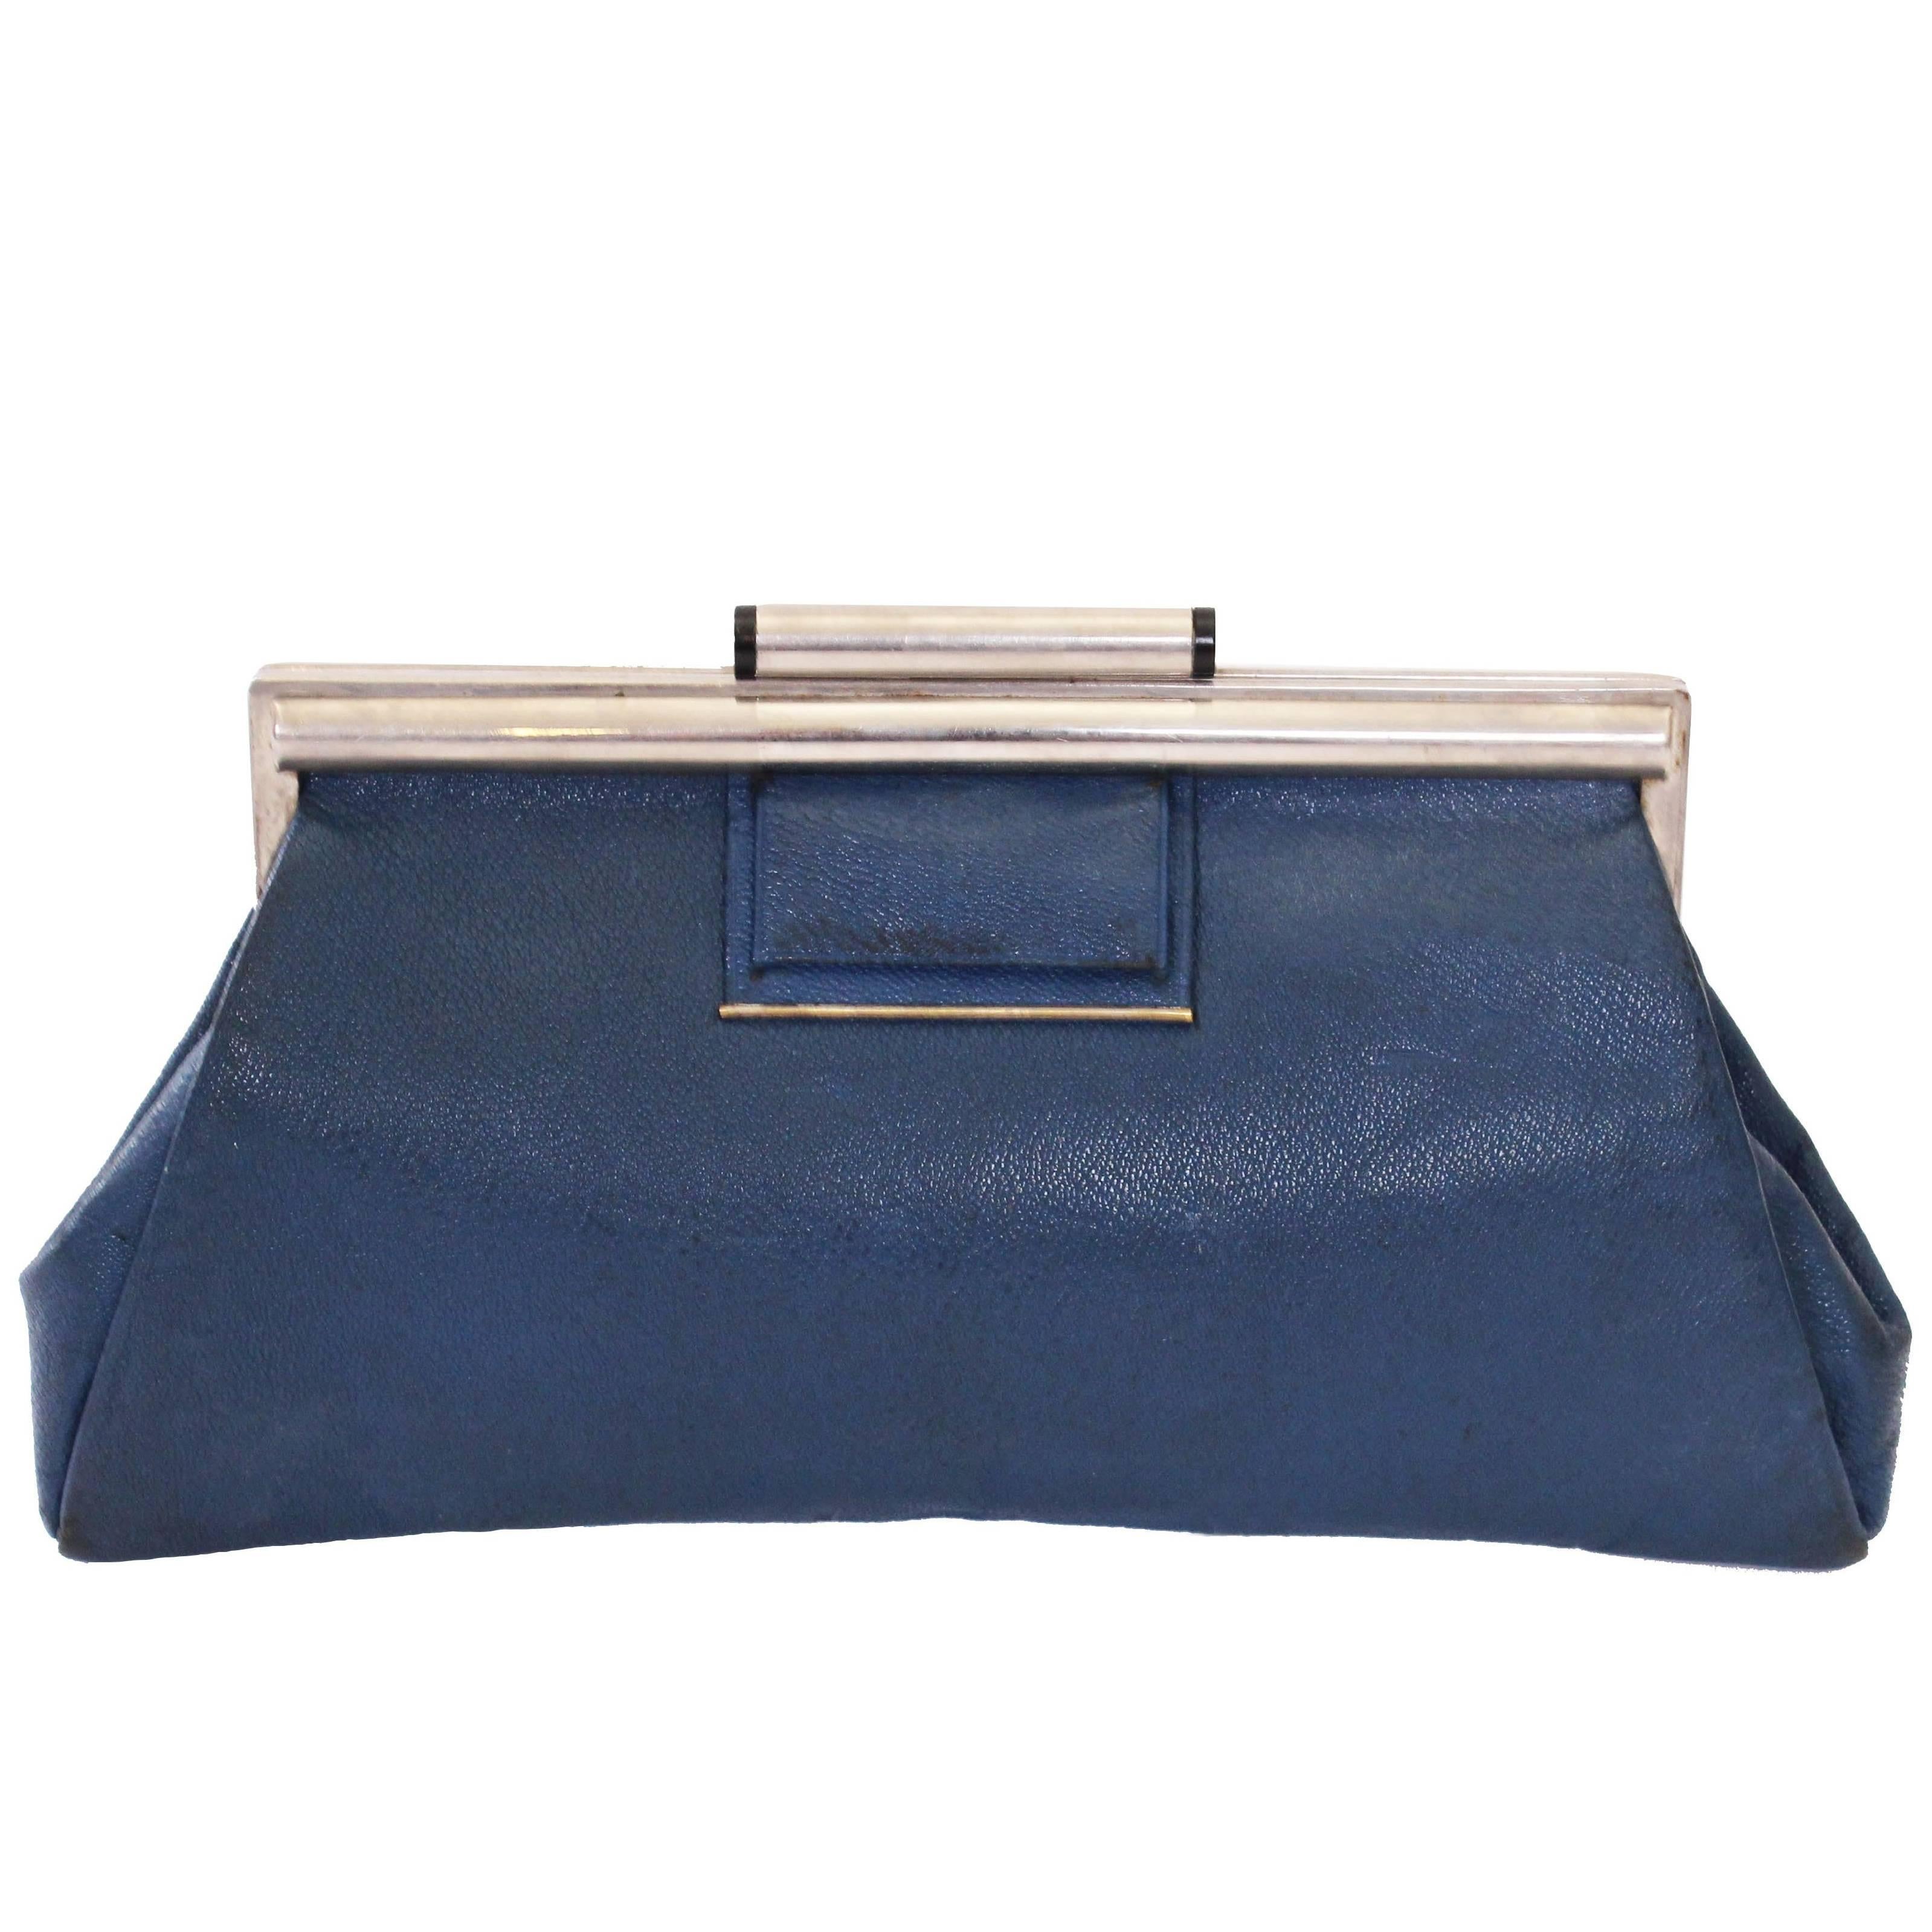 1920s Art Deco Blue Leather Clutch Bag